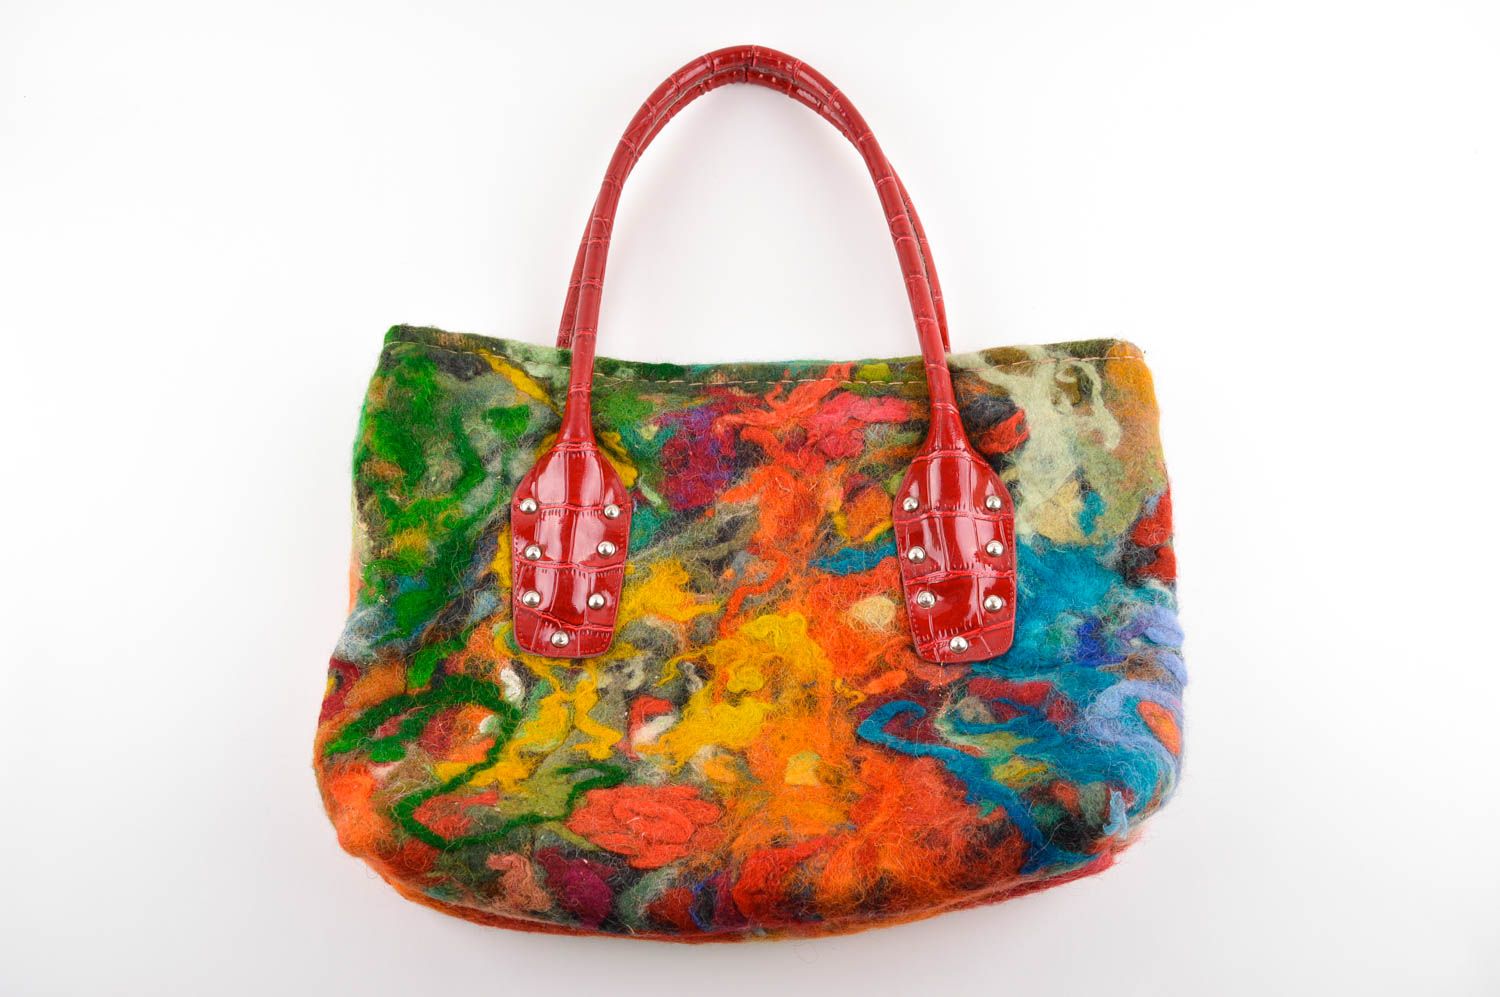 Handmade bag designer handbag woolen bag for women unusual bag gift ideas photo 2